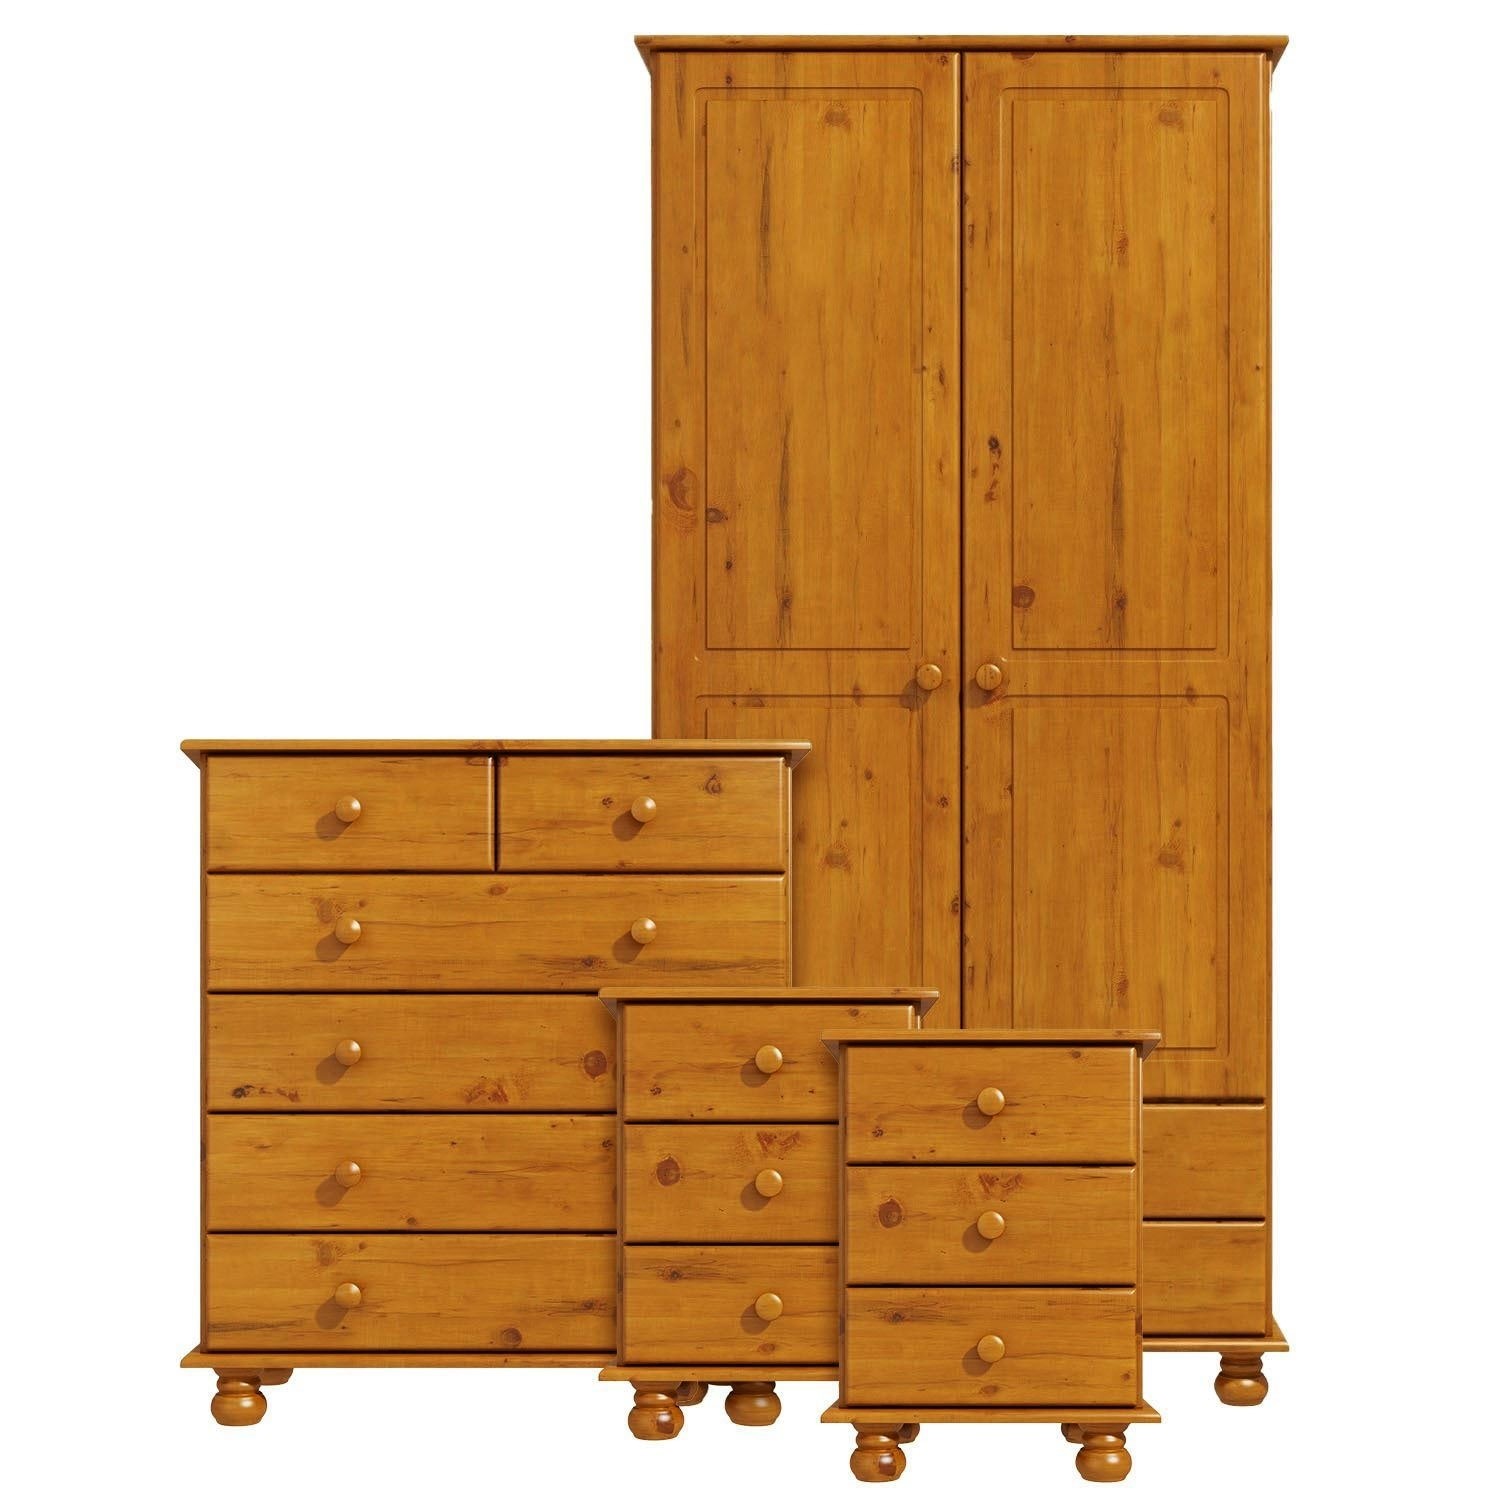 Photo of Pine 4 piece bedroom furniture set - hamilton